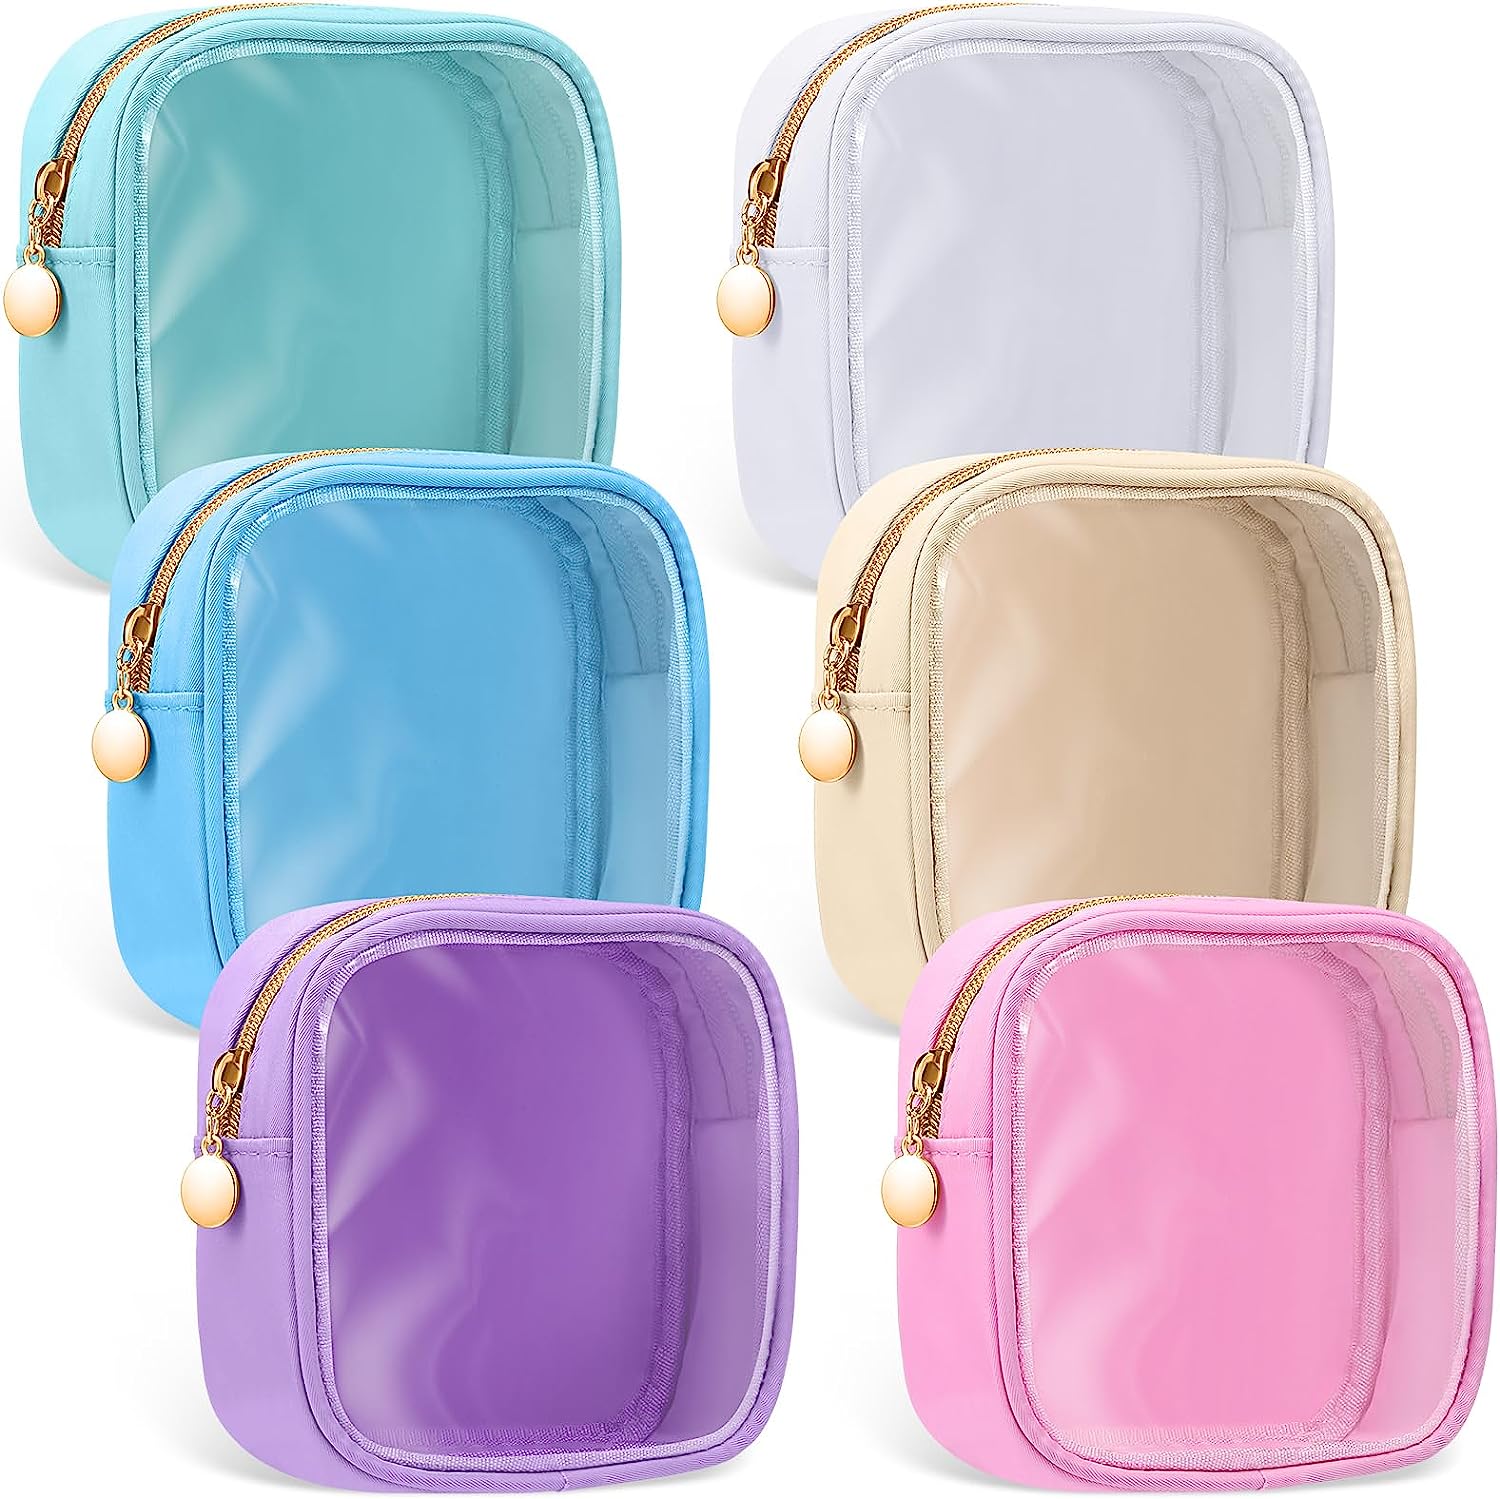 UIXIZQ Nylon Makeup Bag - Travel Bag Pouch,Toiletry Bag, Makeup